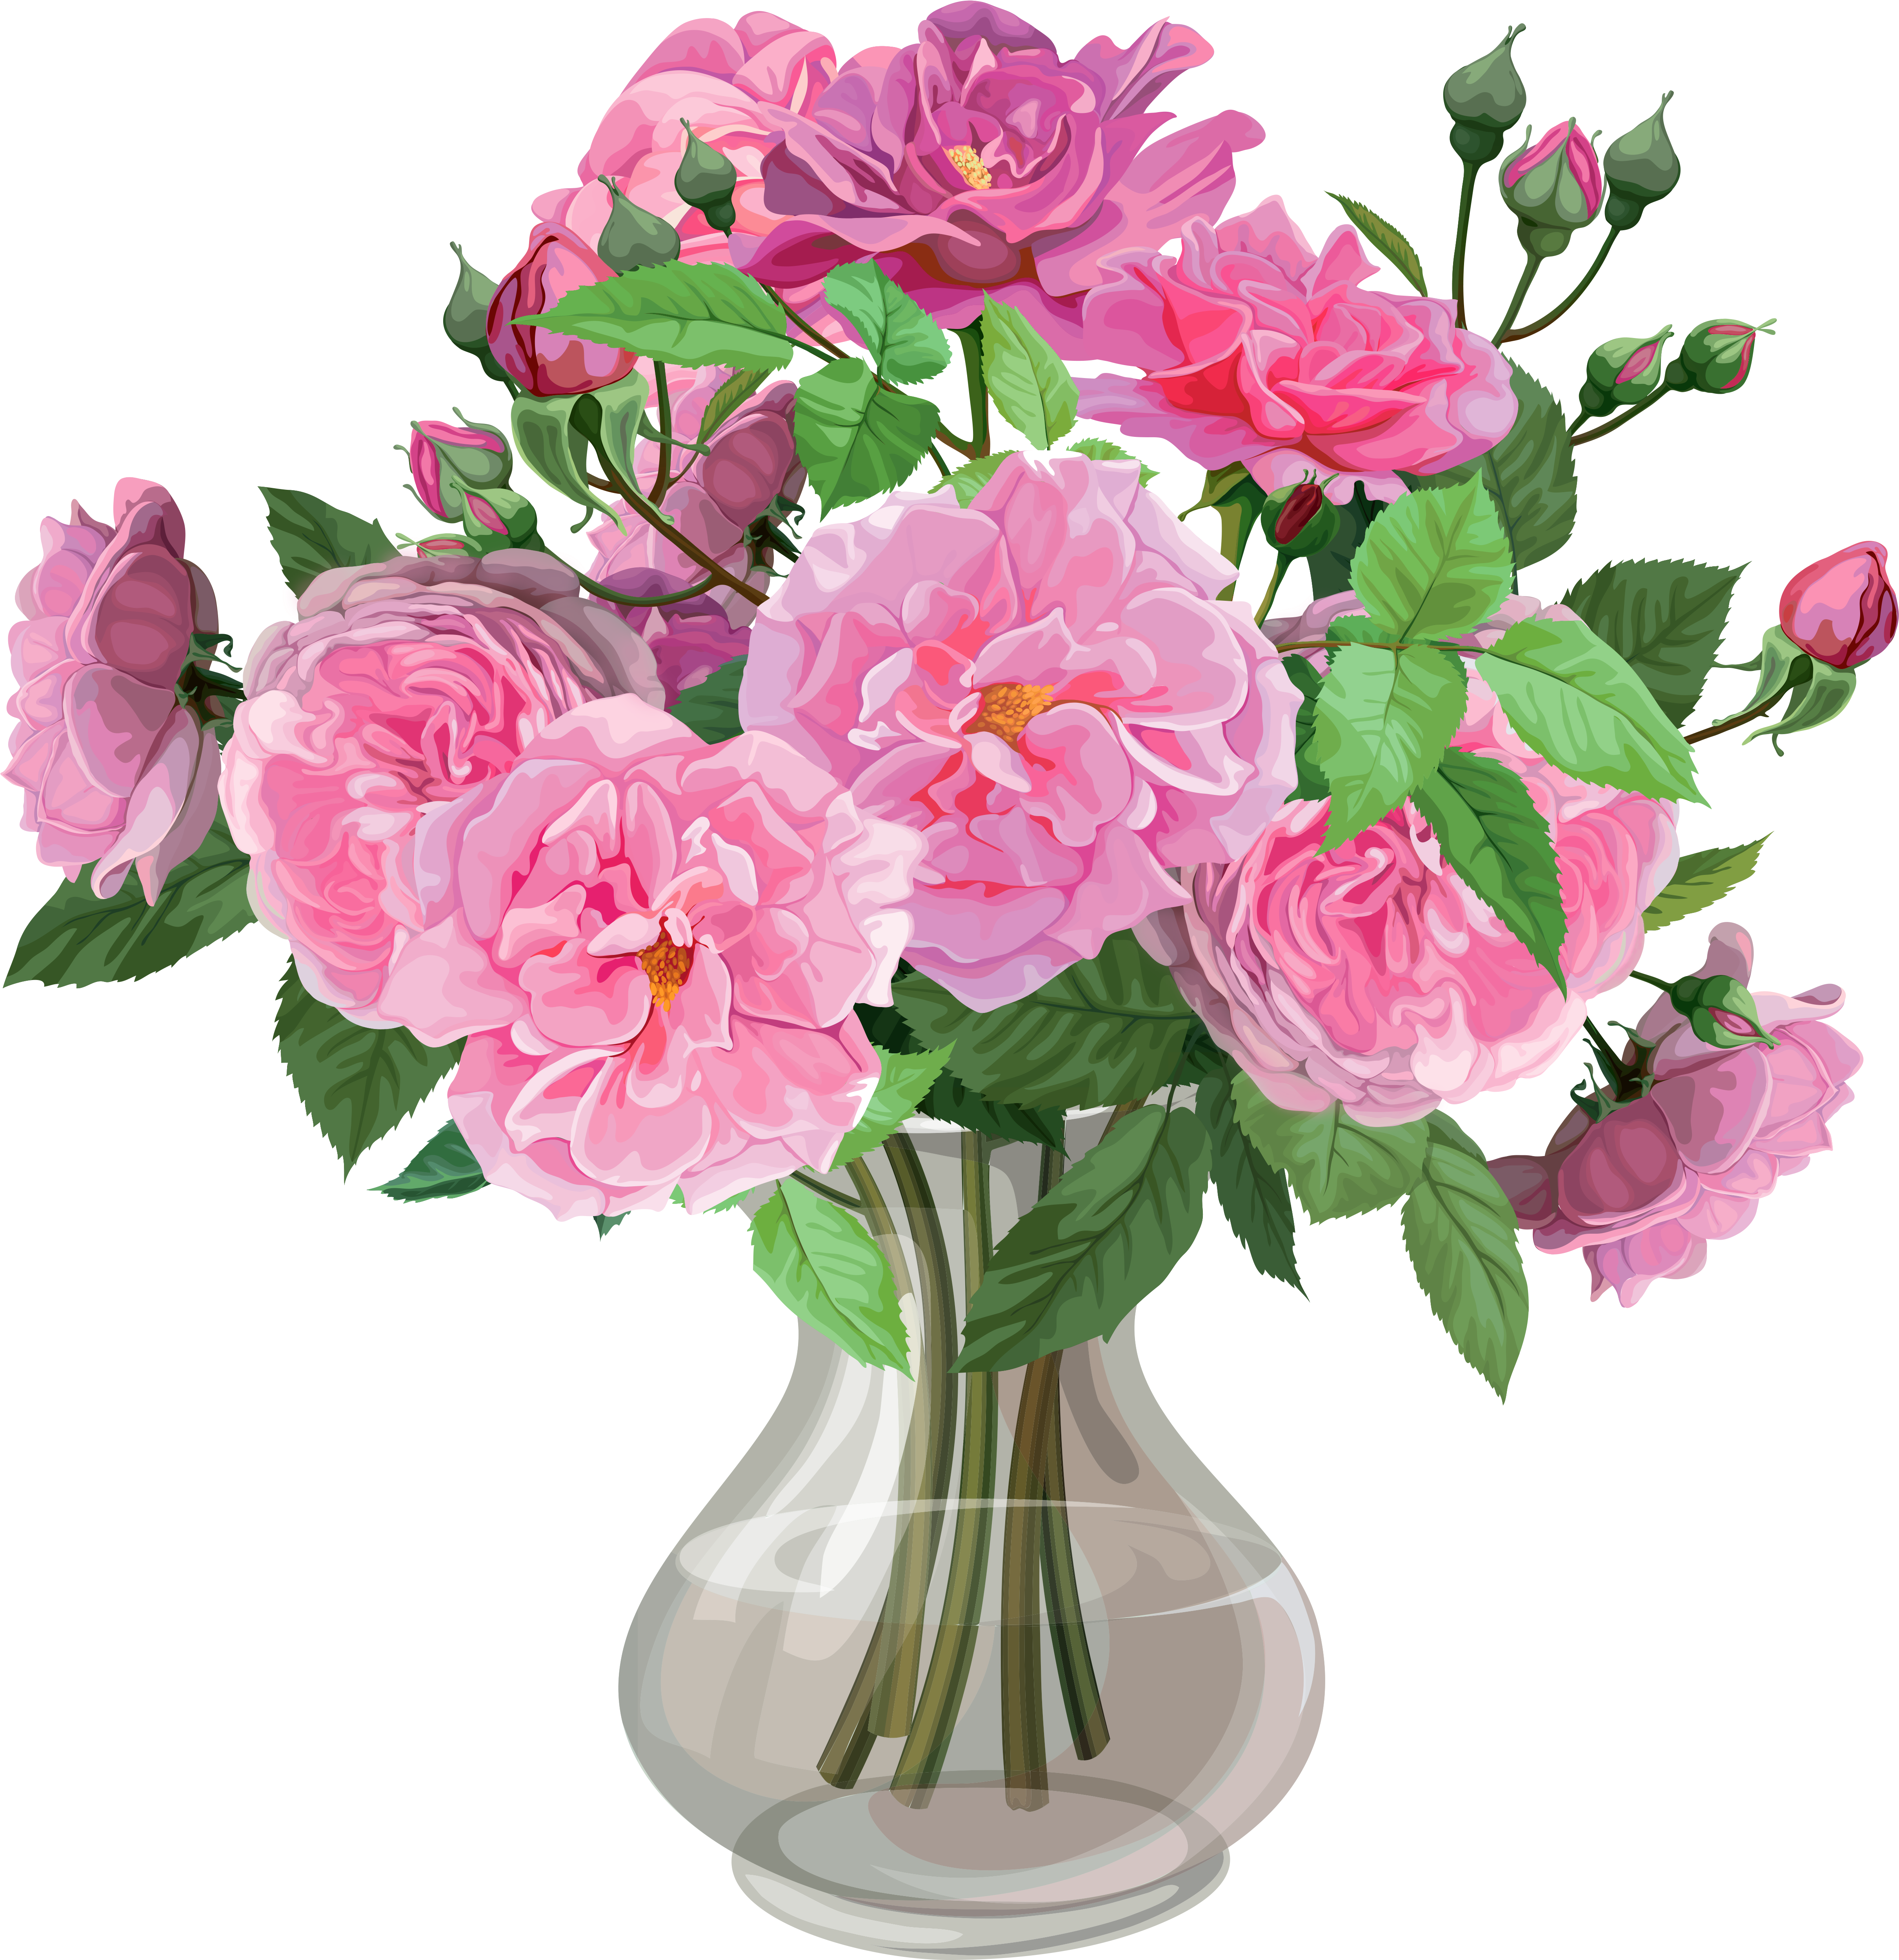 Download 0, - Transparent Flower Vase Clipart PNG Image with No Background  